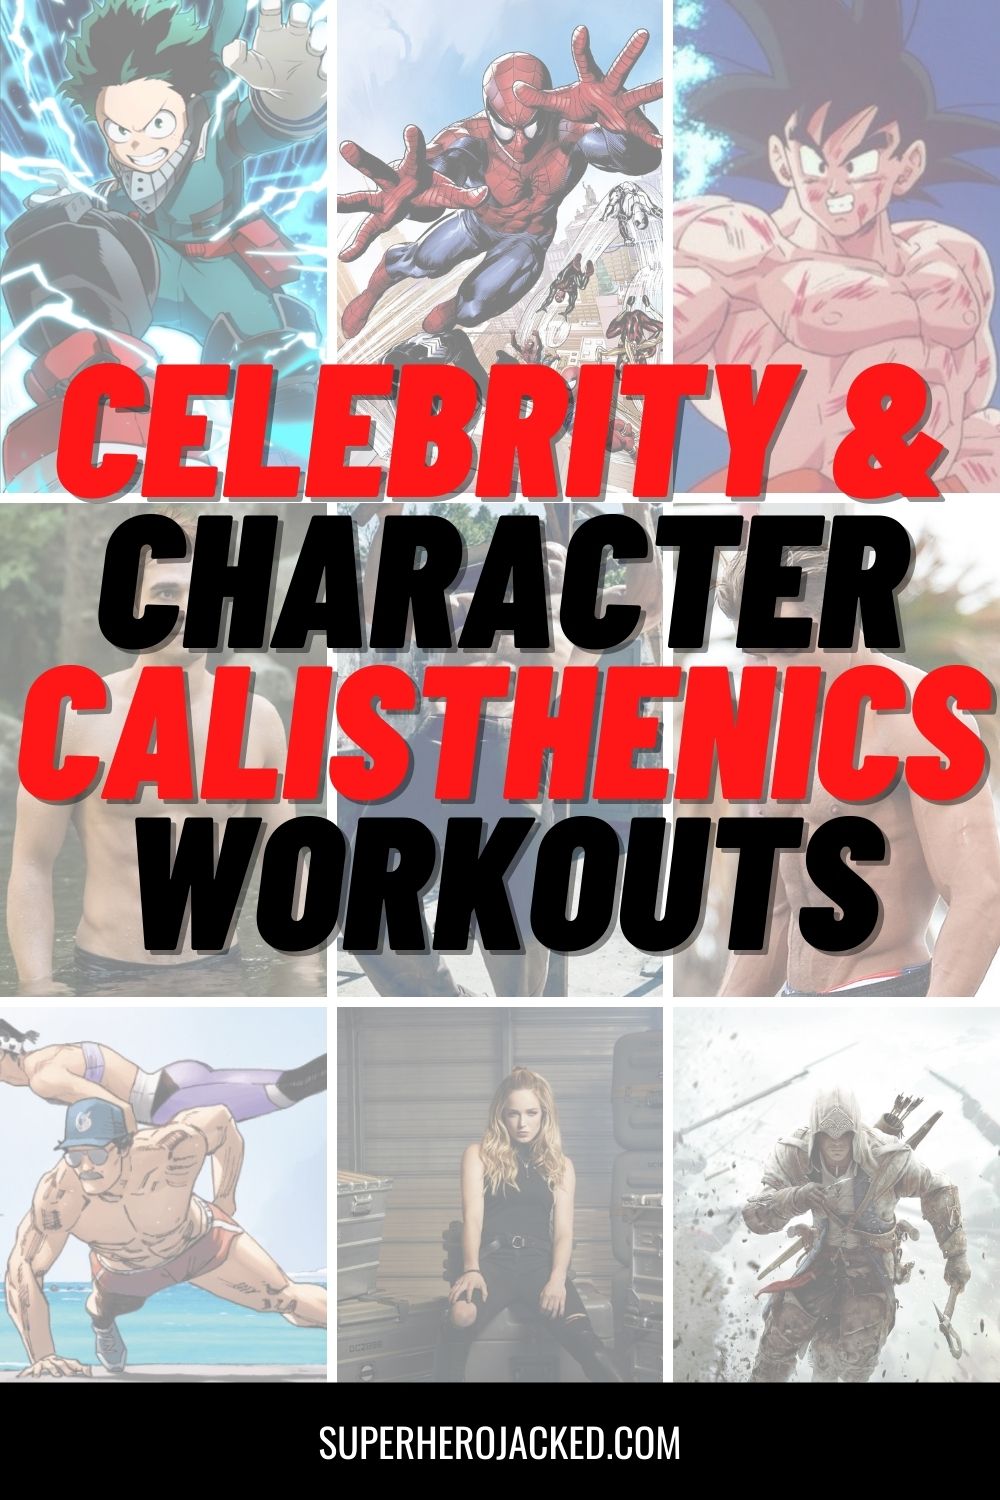 Calisthenics Workouts